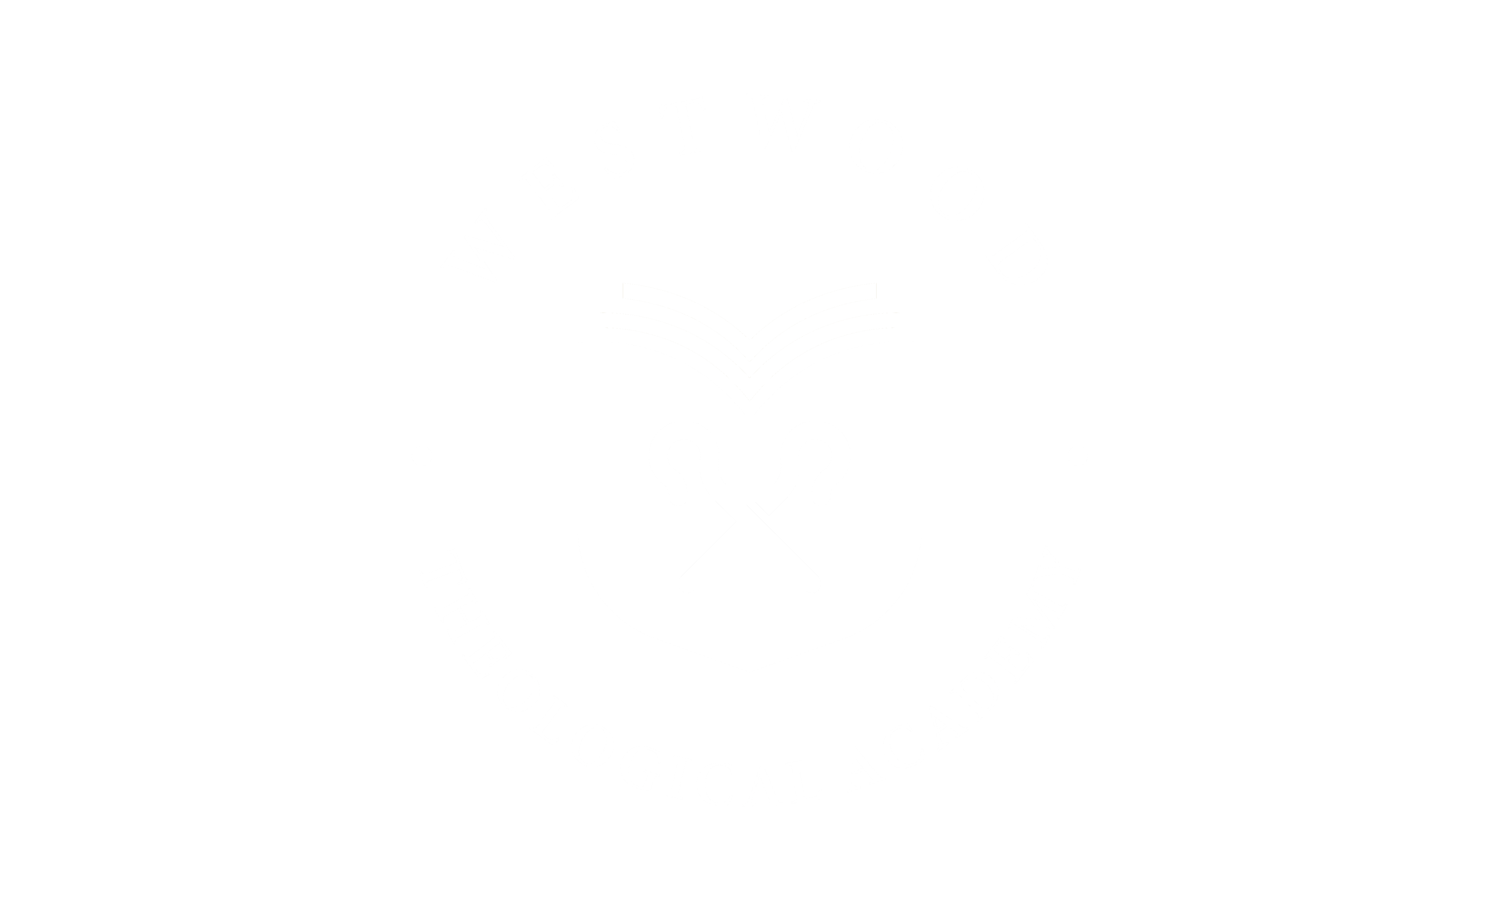 Westwood Theological Academy